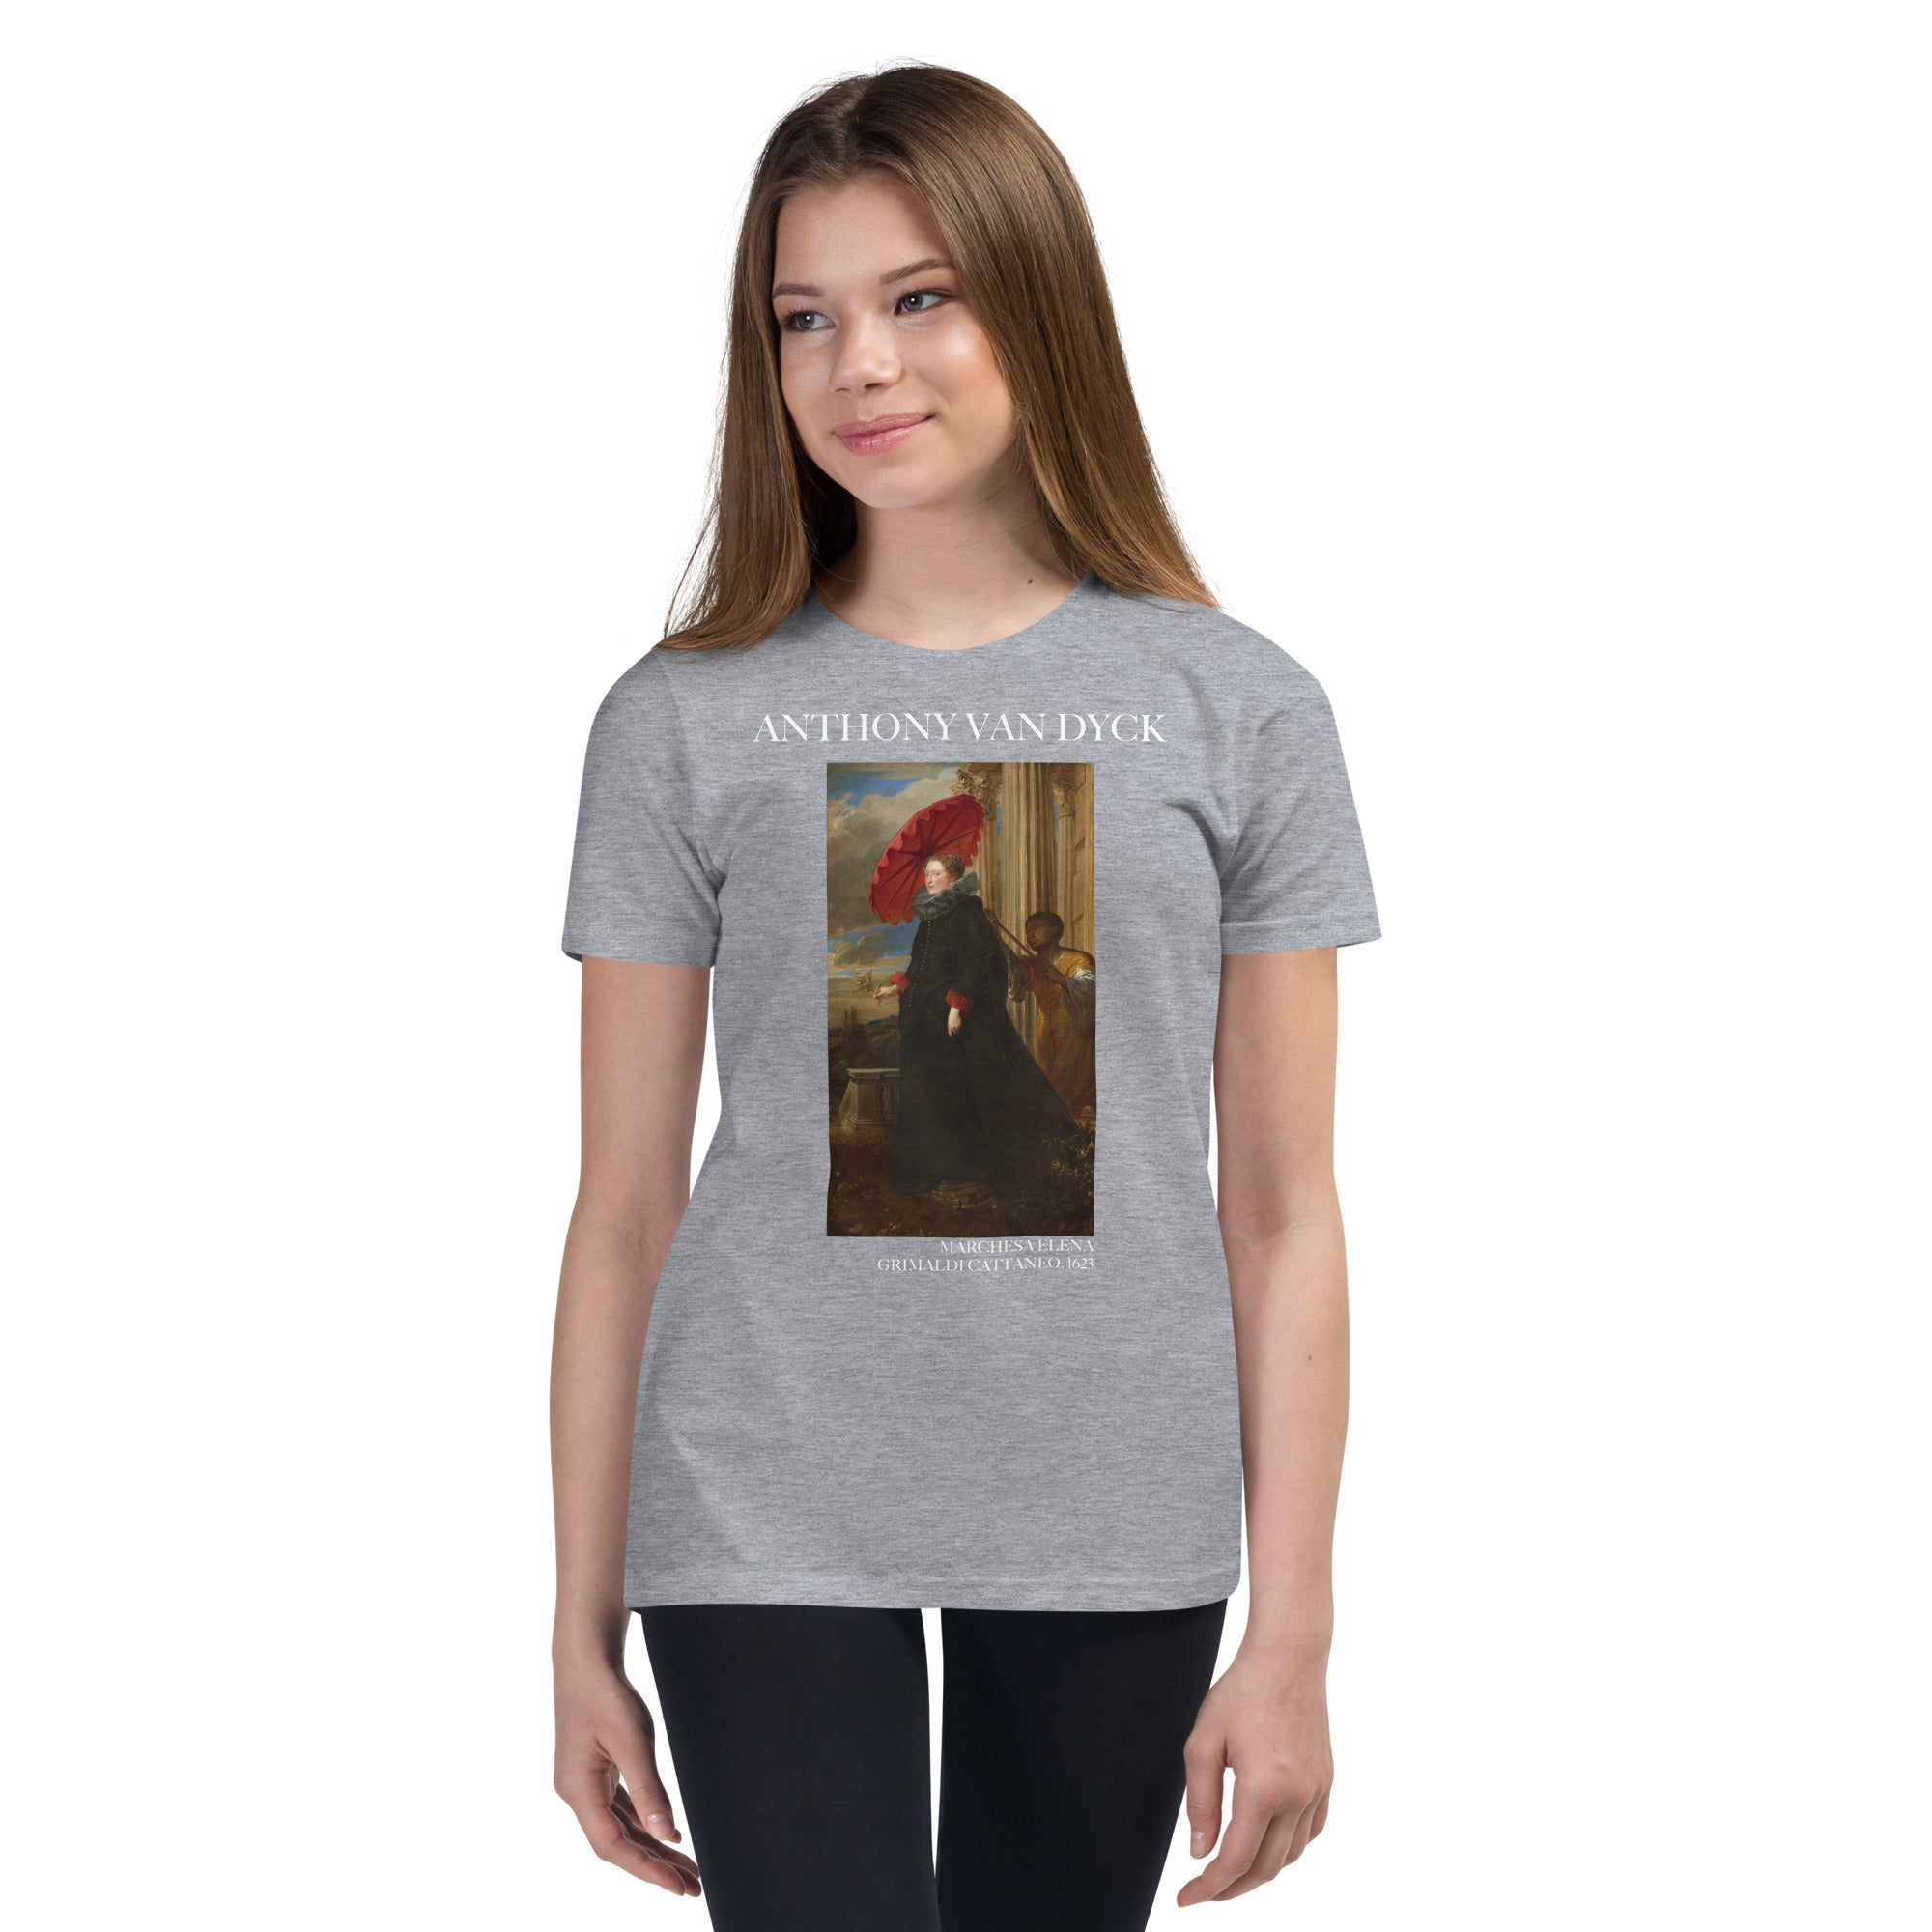 Sir Anthony van Dyck 'Marchesa Elena Grimaldi Cattaneo' Famous Painting Short Sleeve T-Shirt | Premium Youth Art Tee